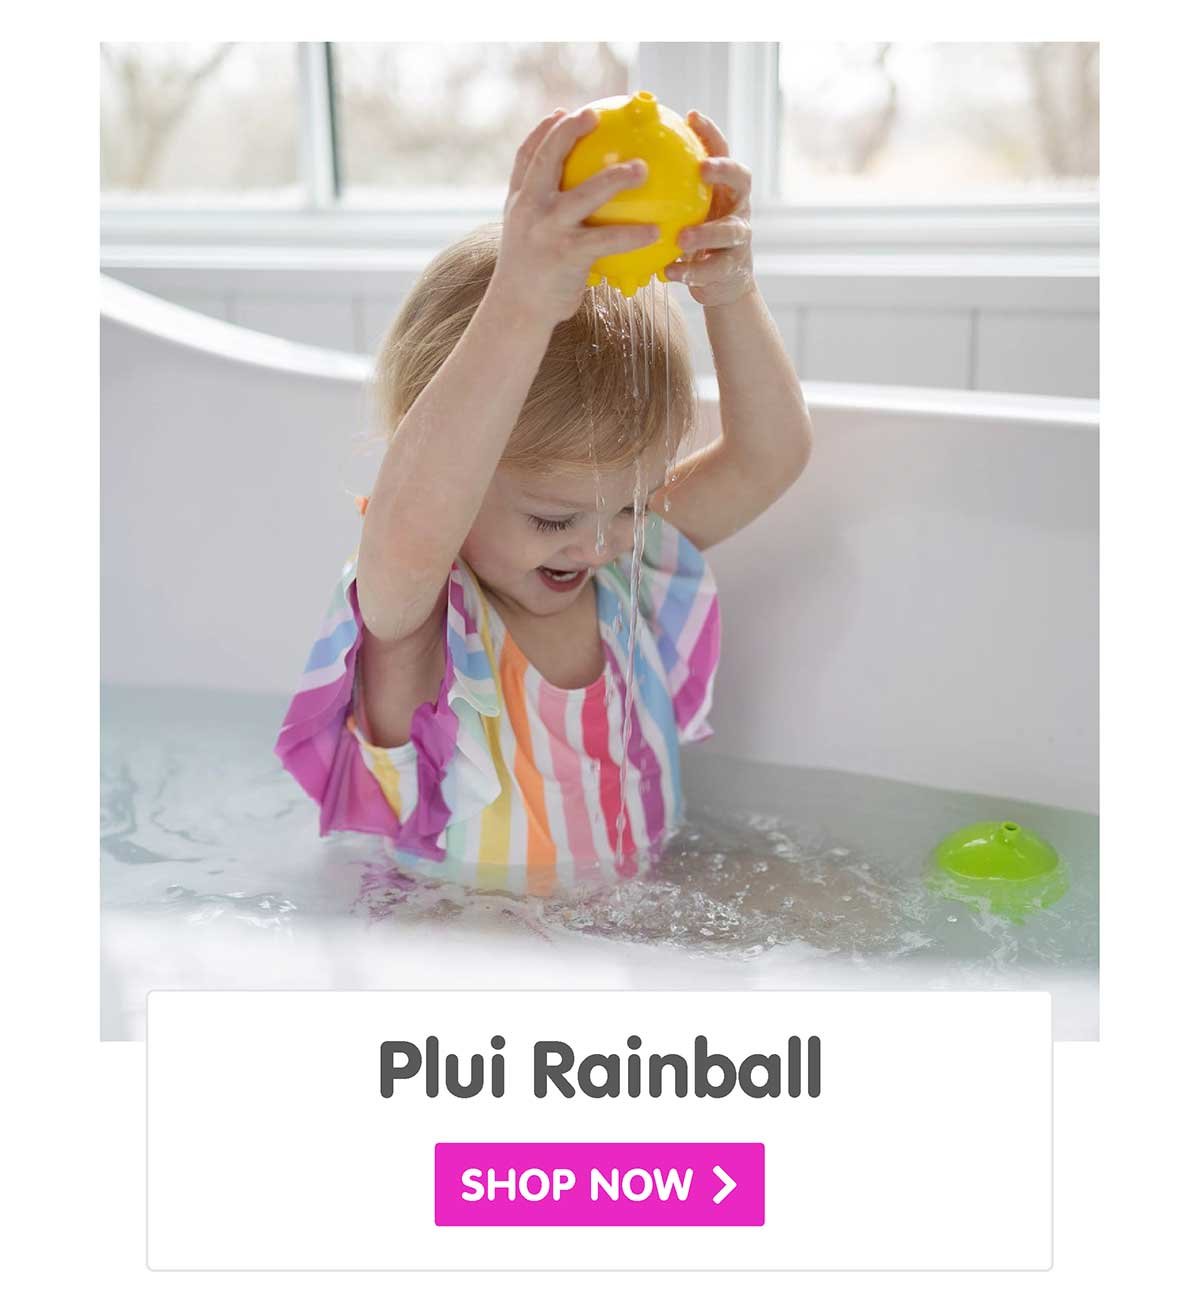 Plui Rainball by MOLUK